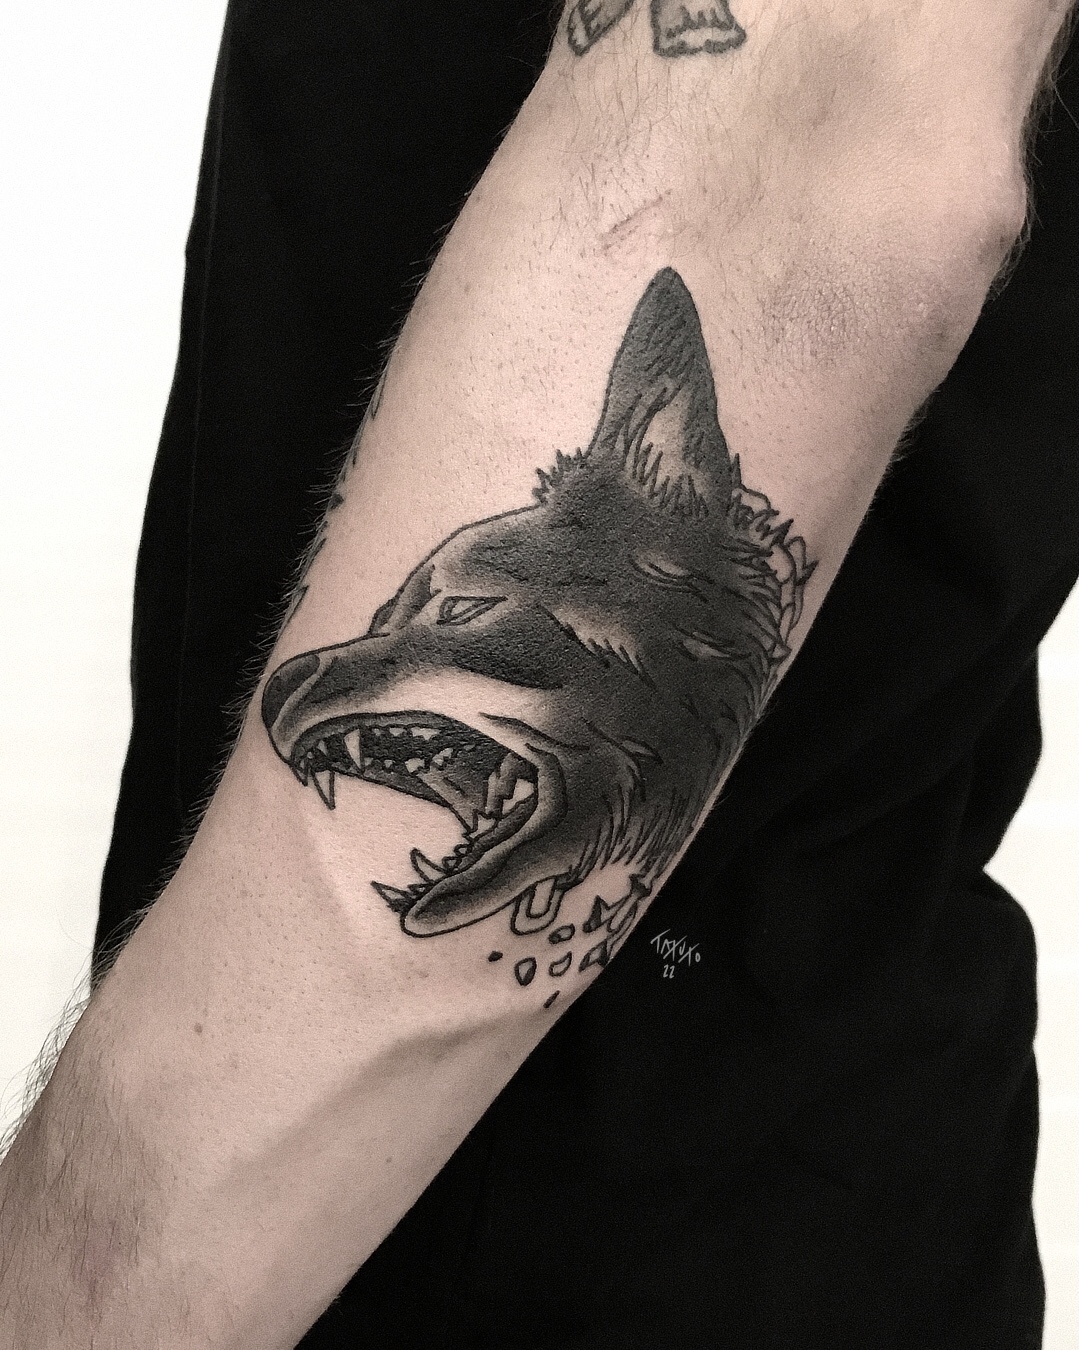 nico-tatuto-tatouage-chien-dog-placard-tattoo-shop-bordeaux-1